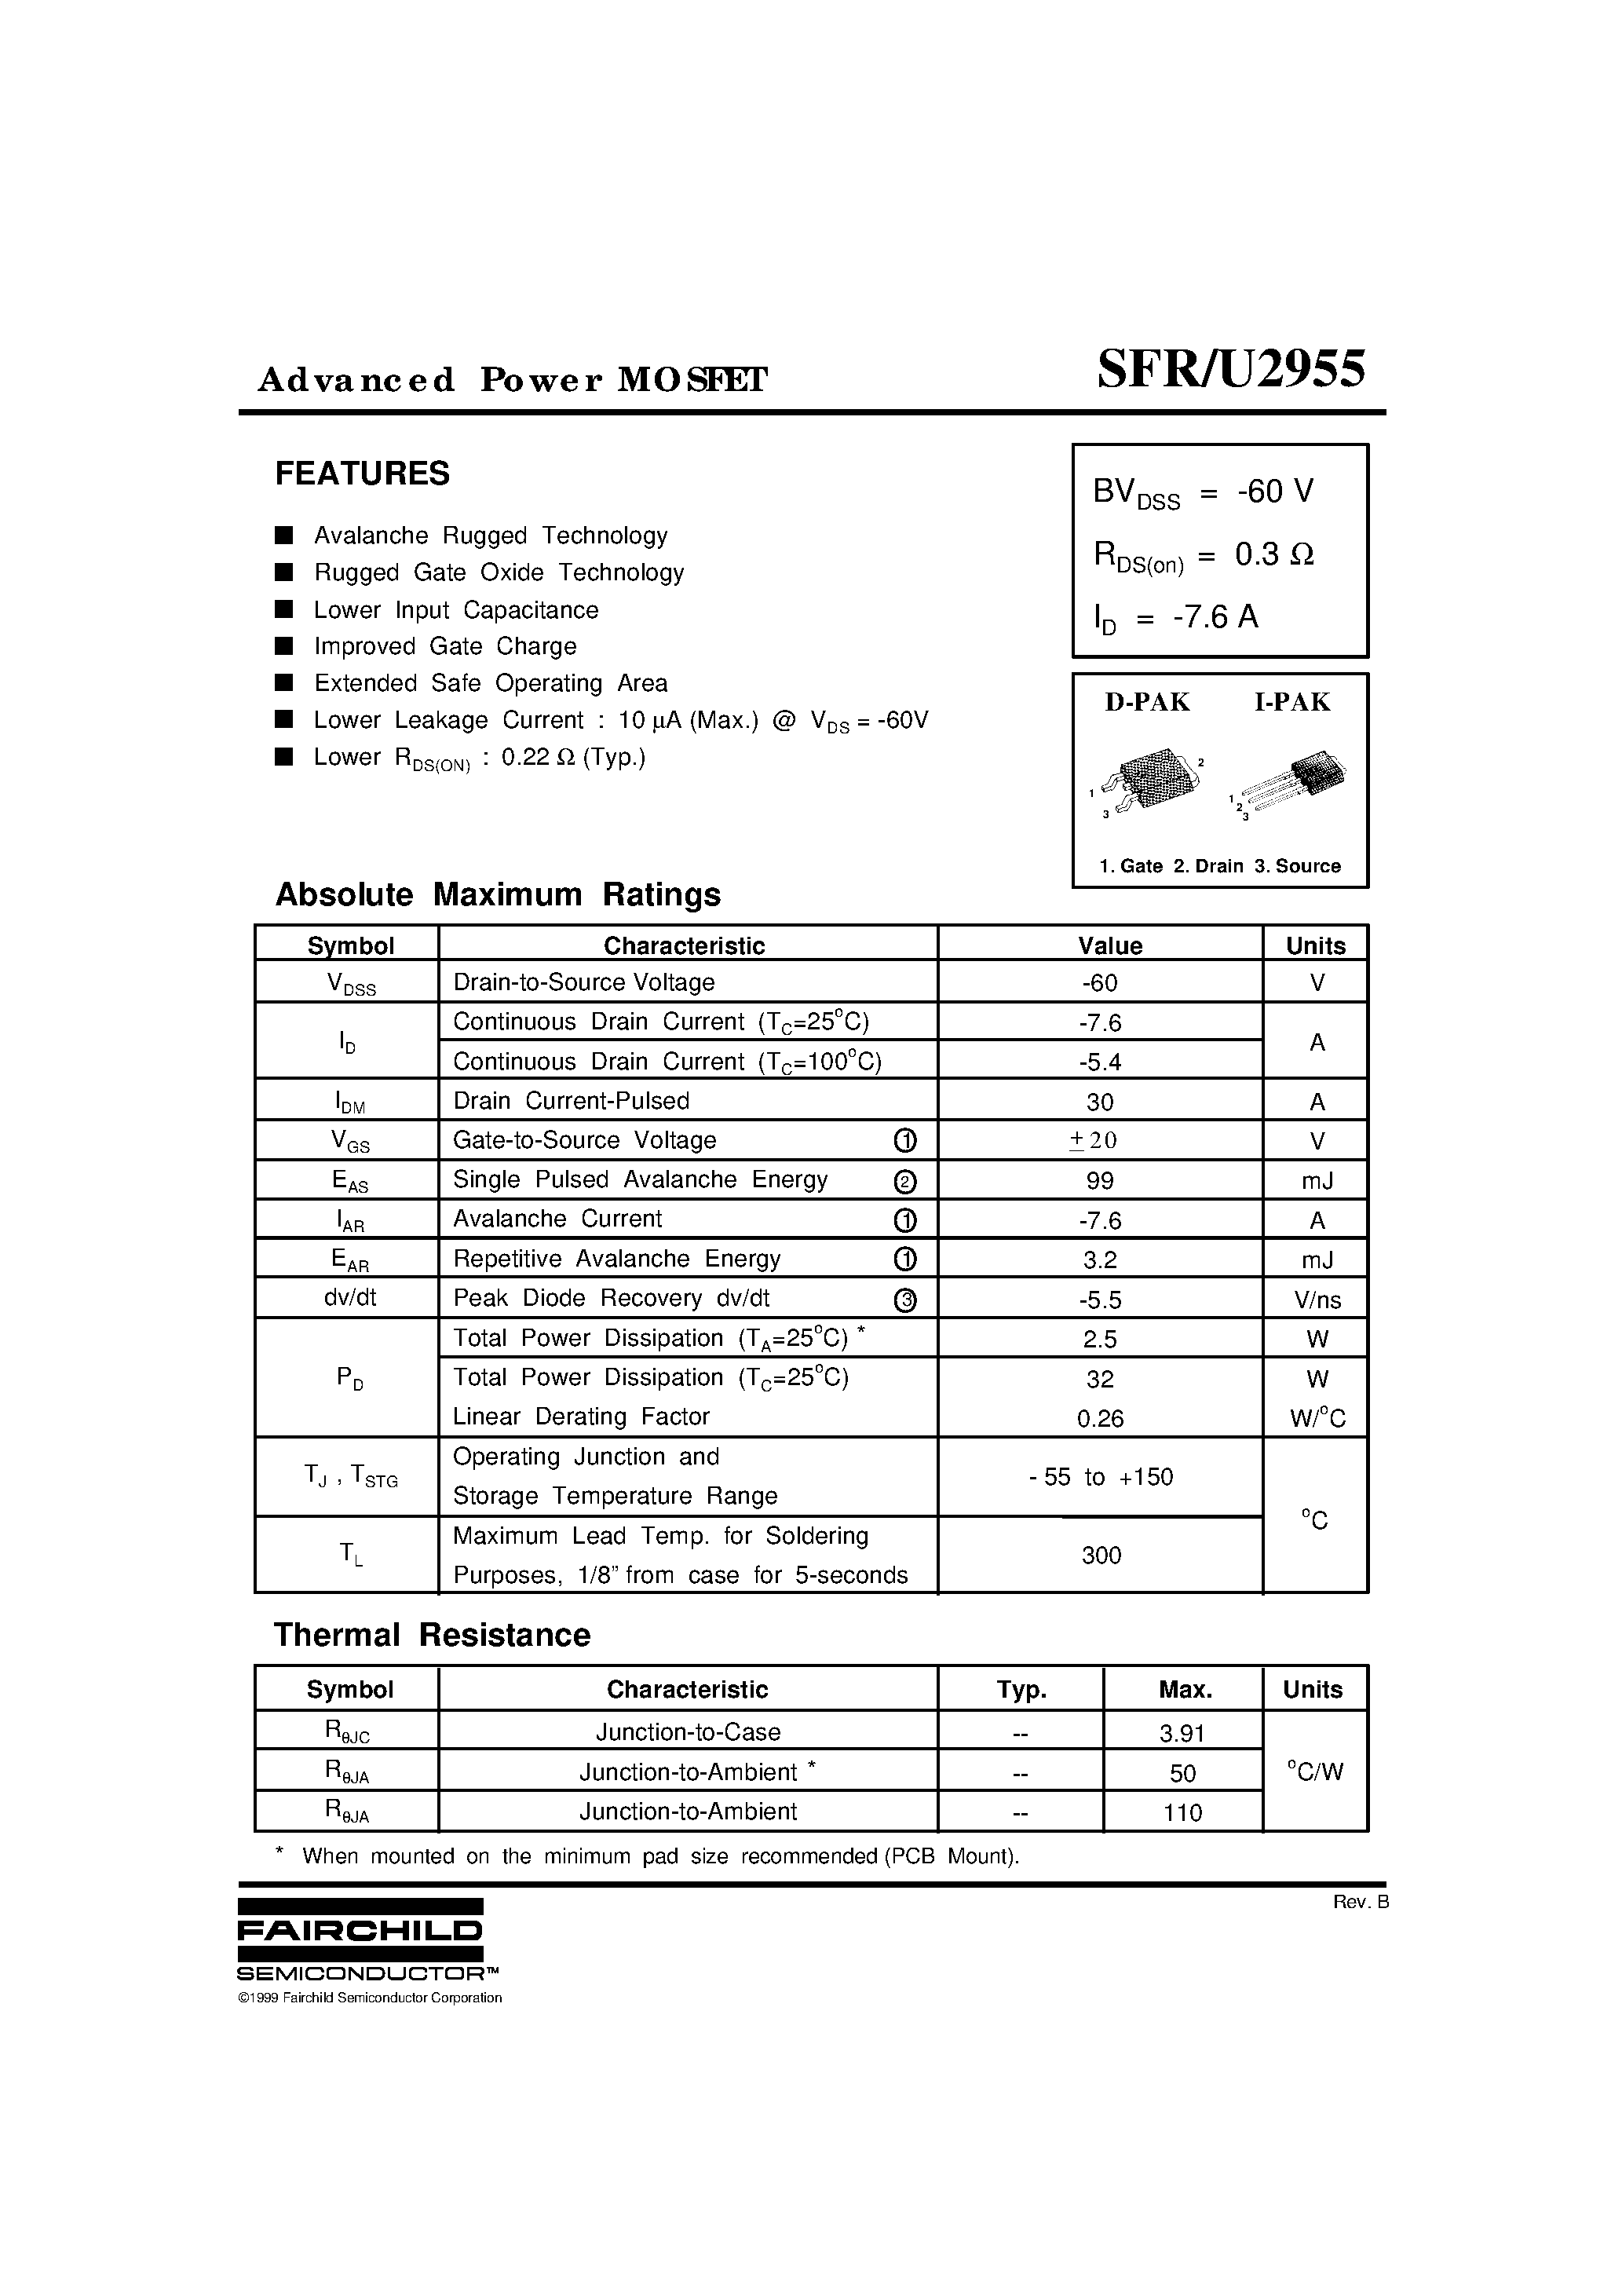 Даташит SFRU2955 - Advanced Power MOSFET страница 1